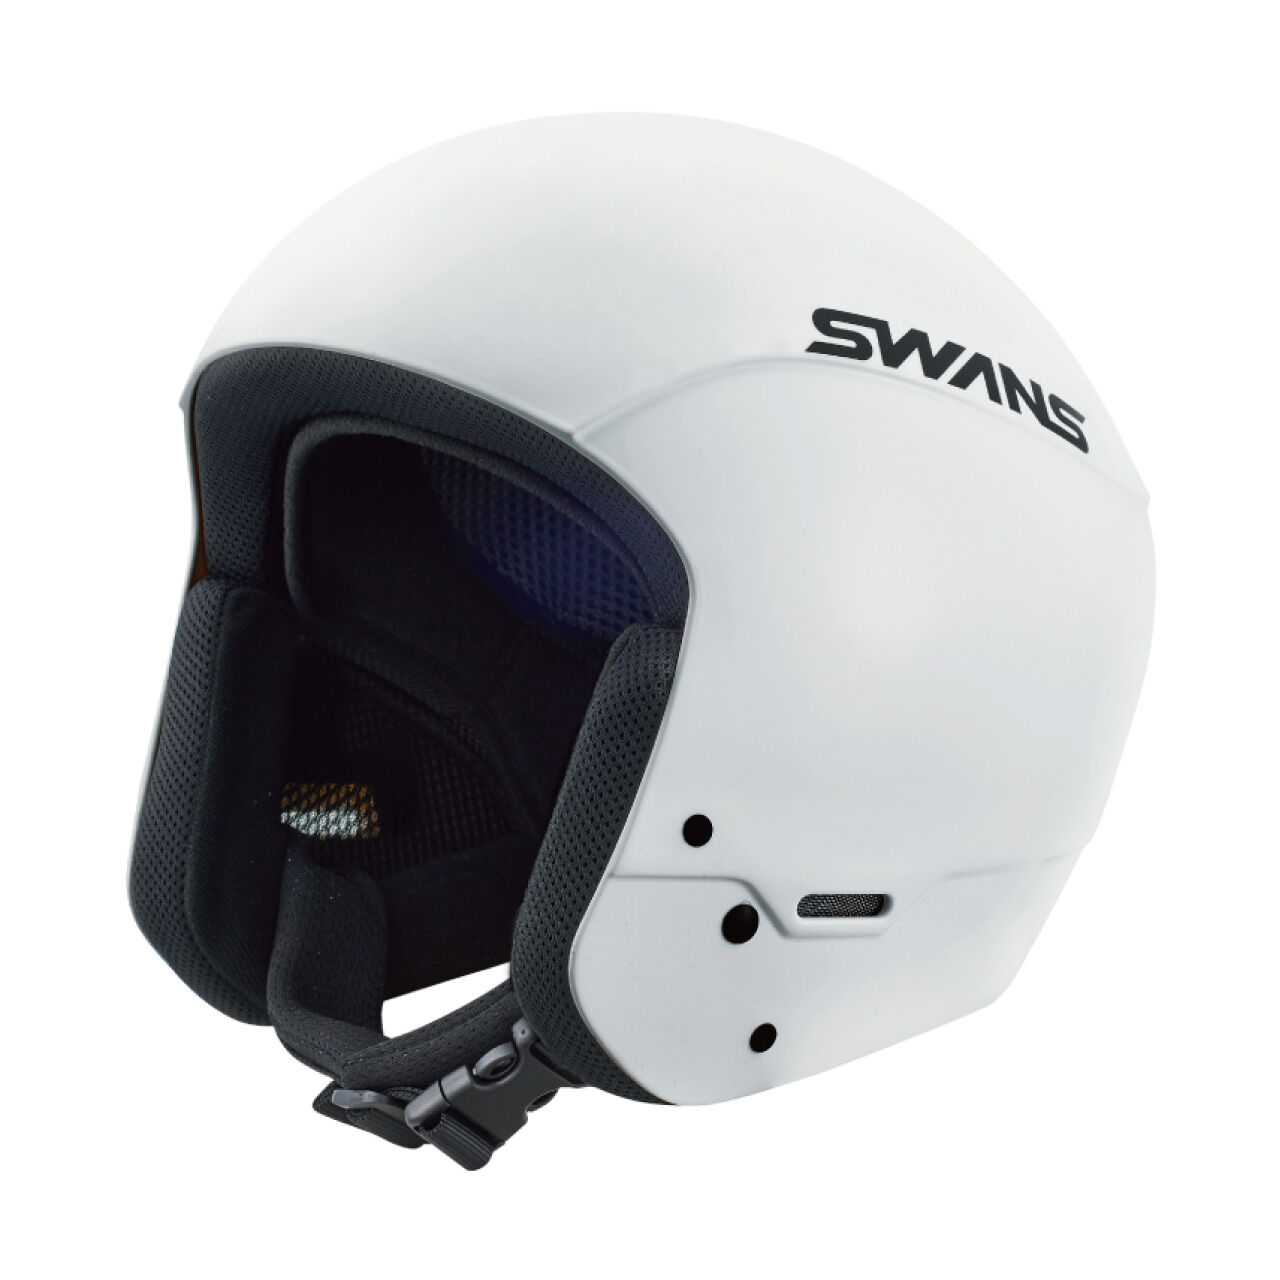 Racing | SWANS Official Online Shop